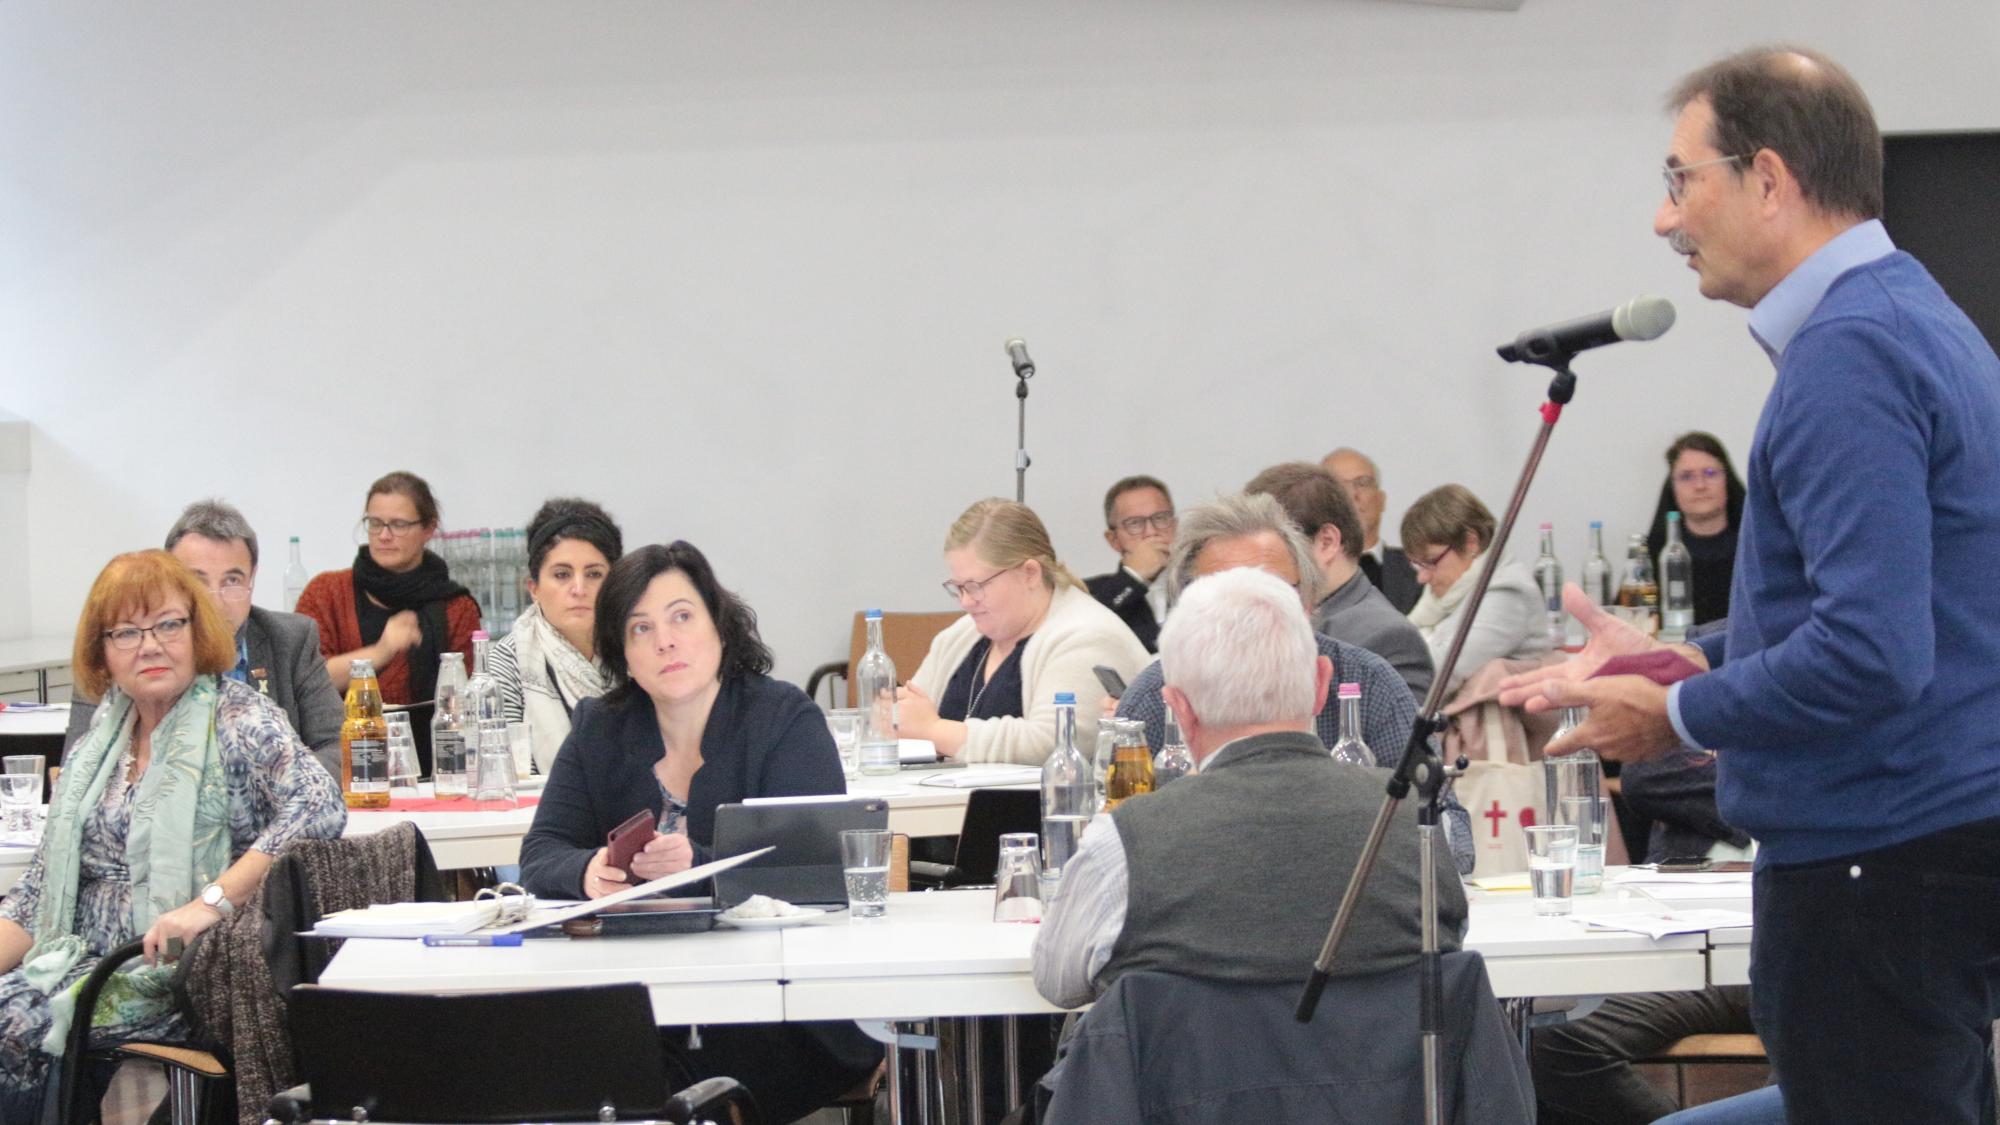 Mainz, 8. Oktober 2022: Diskussion und Austausch bei der Diözesanversammlung im Erbacher Hof.